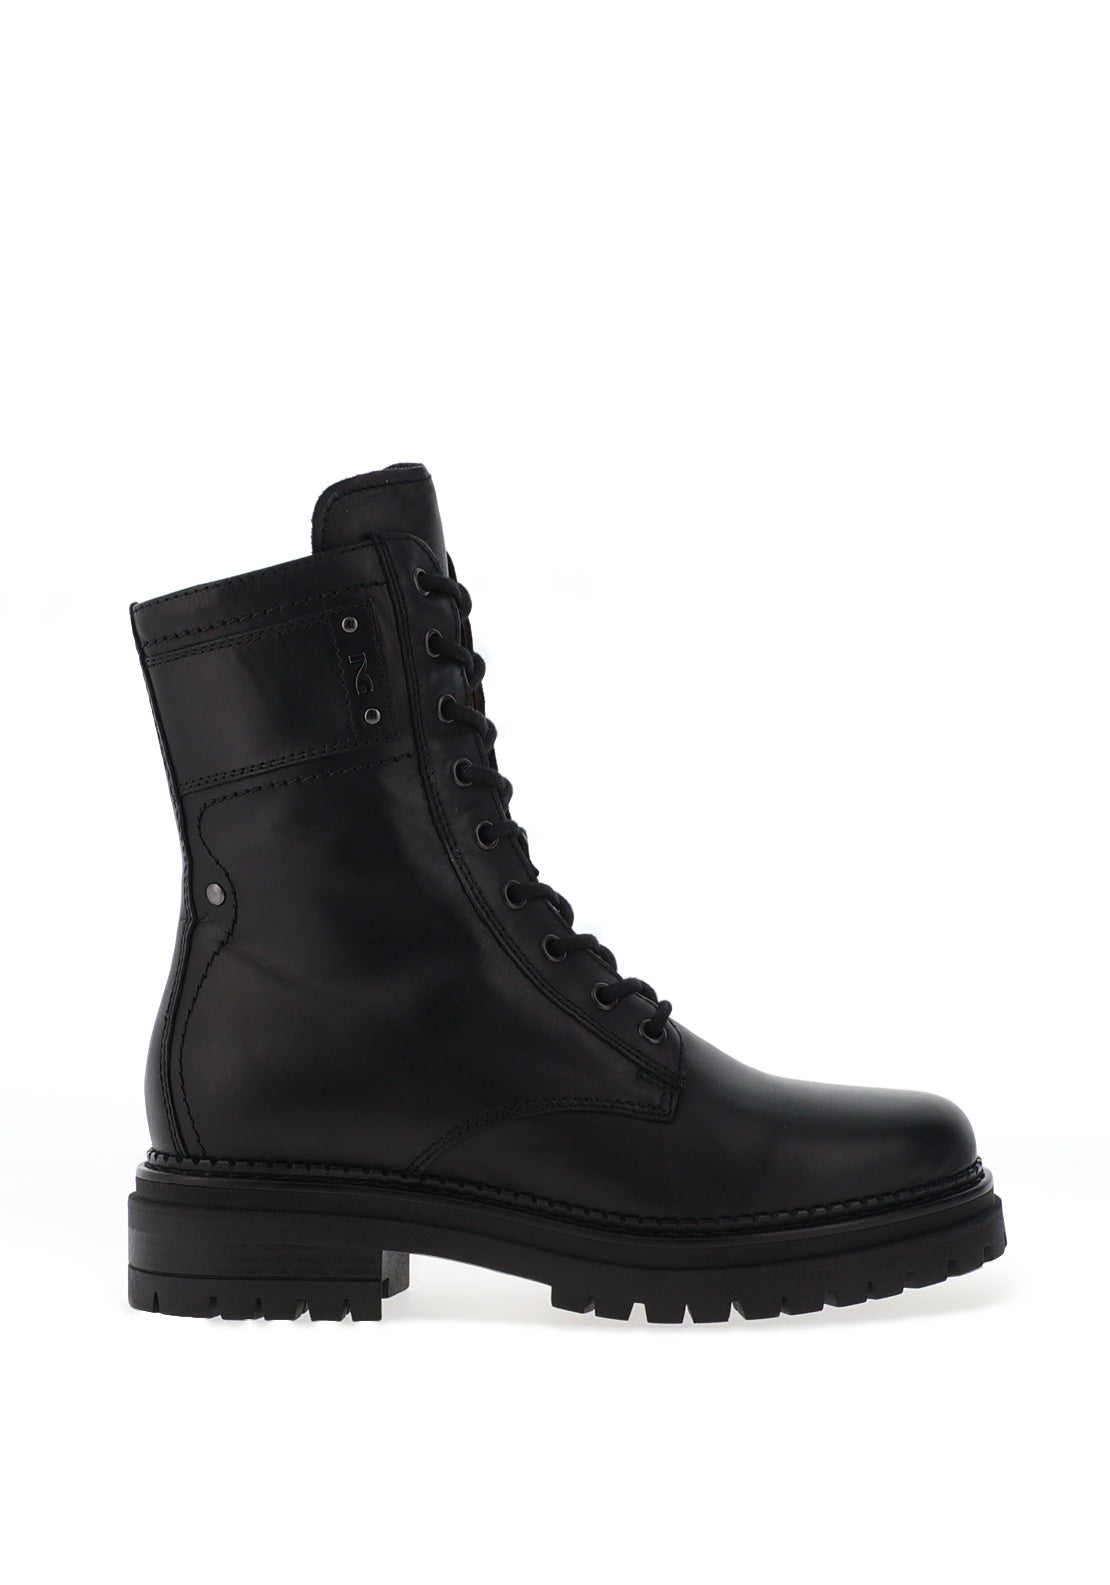 Nero Giardini Leather Military Boot, Black - McElhinneys